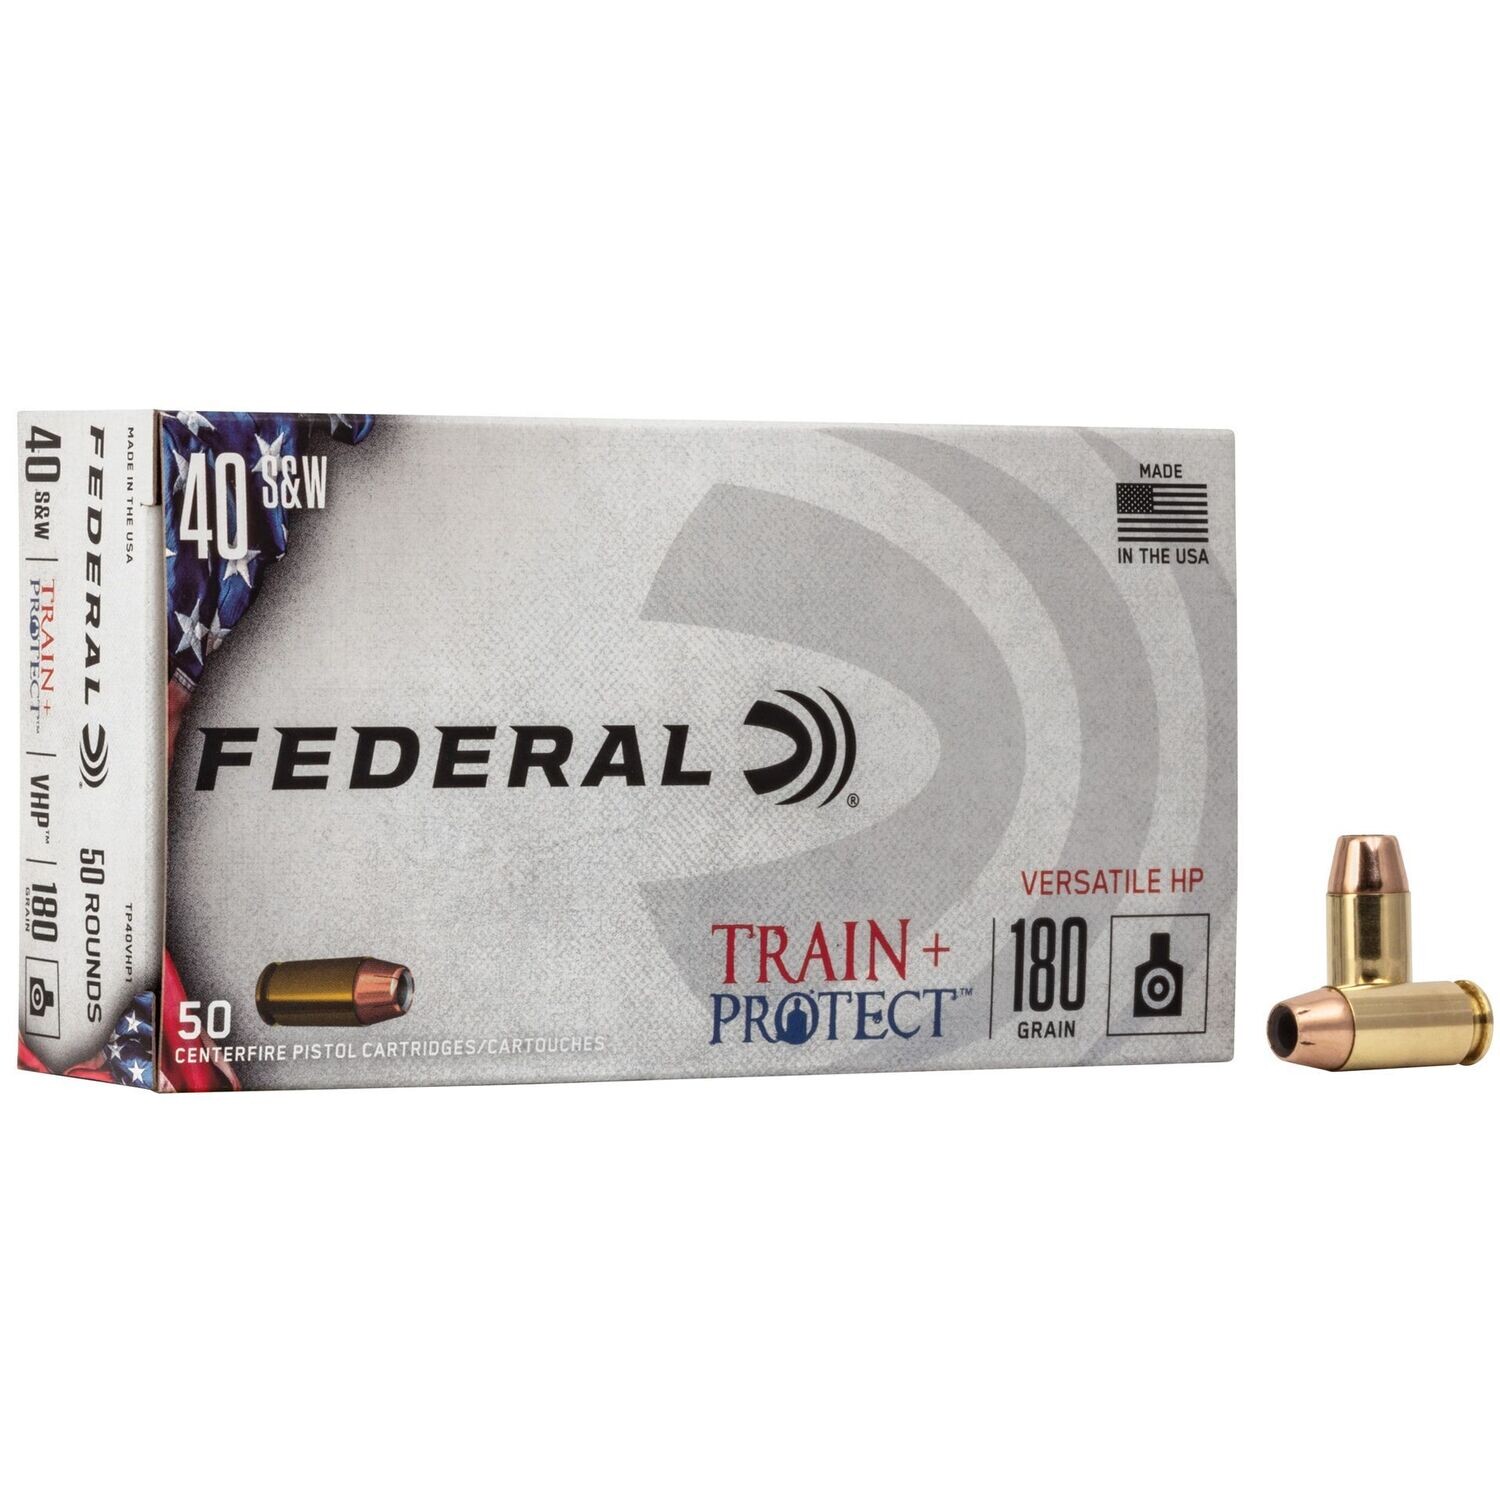 Federal, Train & Protect, 40 S&W, 180 Grain, Versatile Hollow Point, 50 Round Box